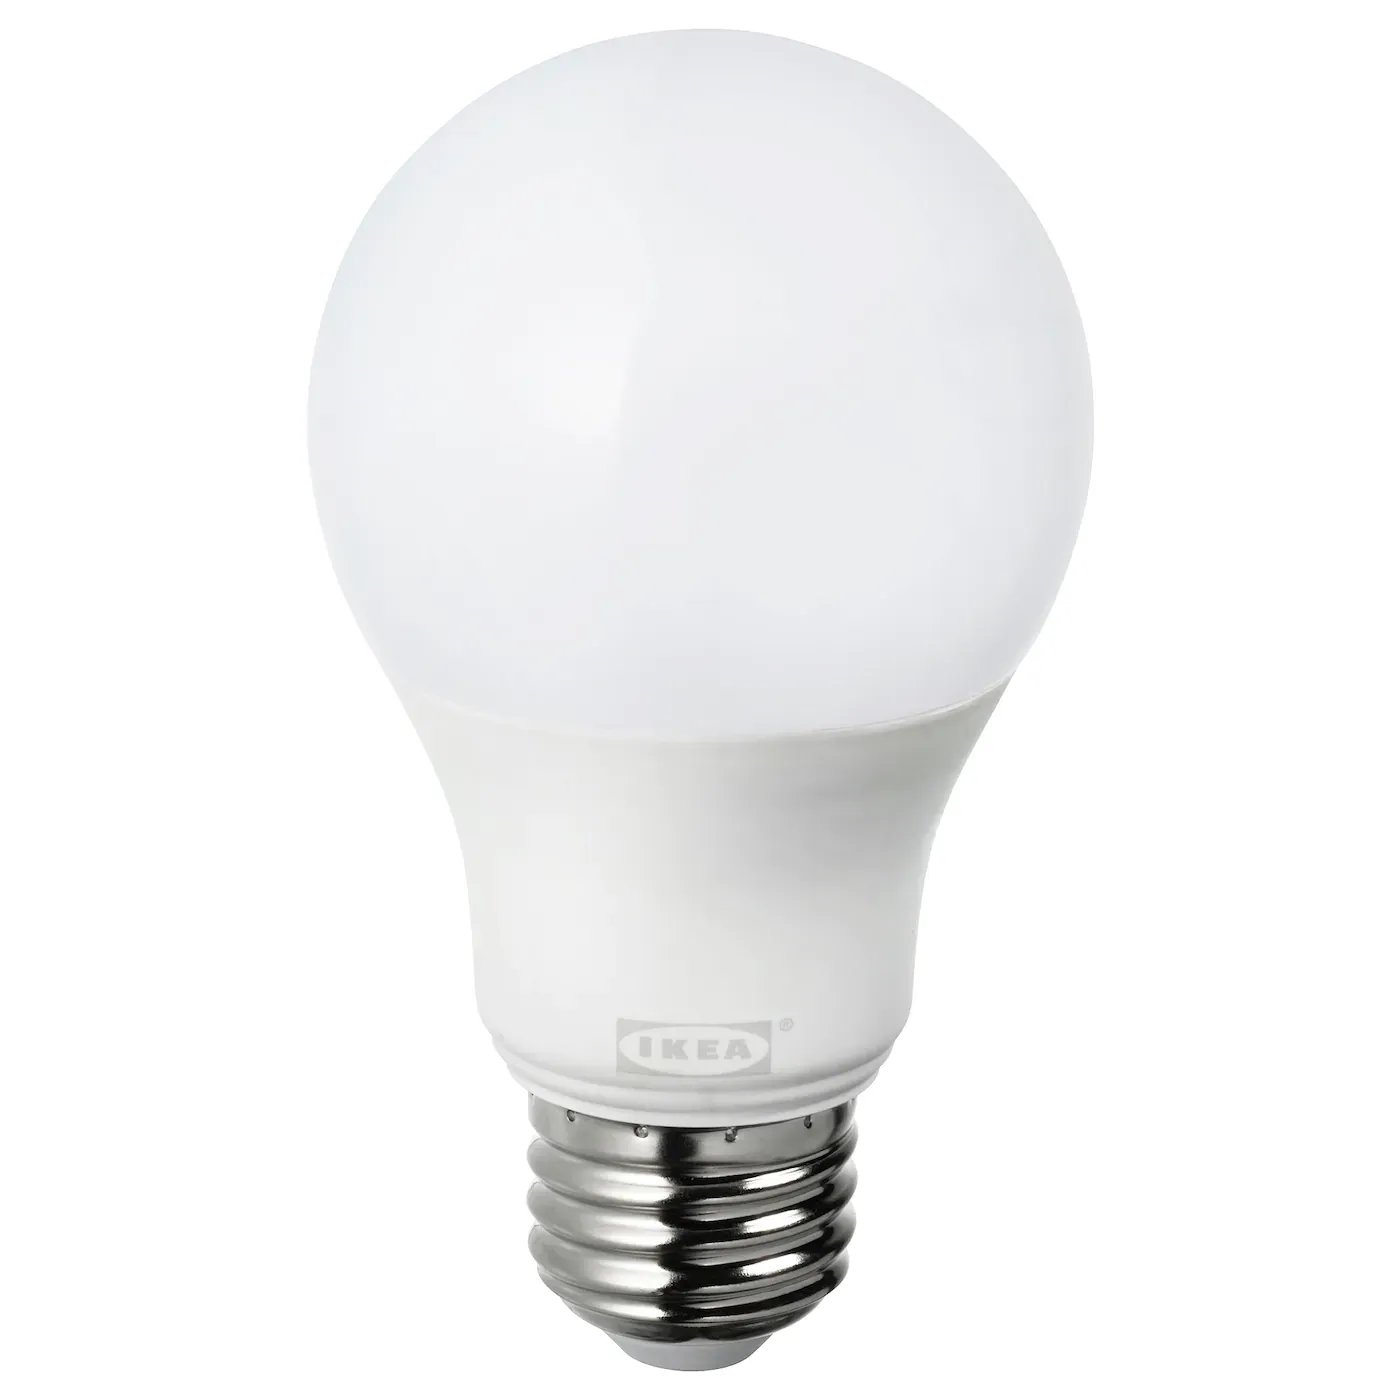 Tradfri LED bulb E26 806 lumen, dimmable, warm white